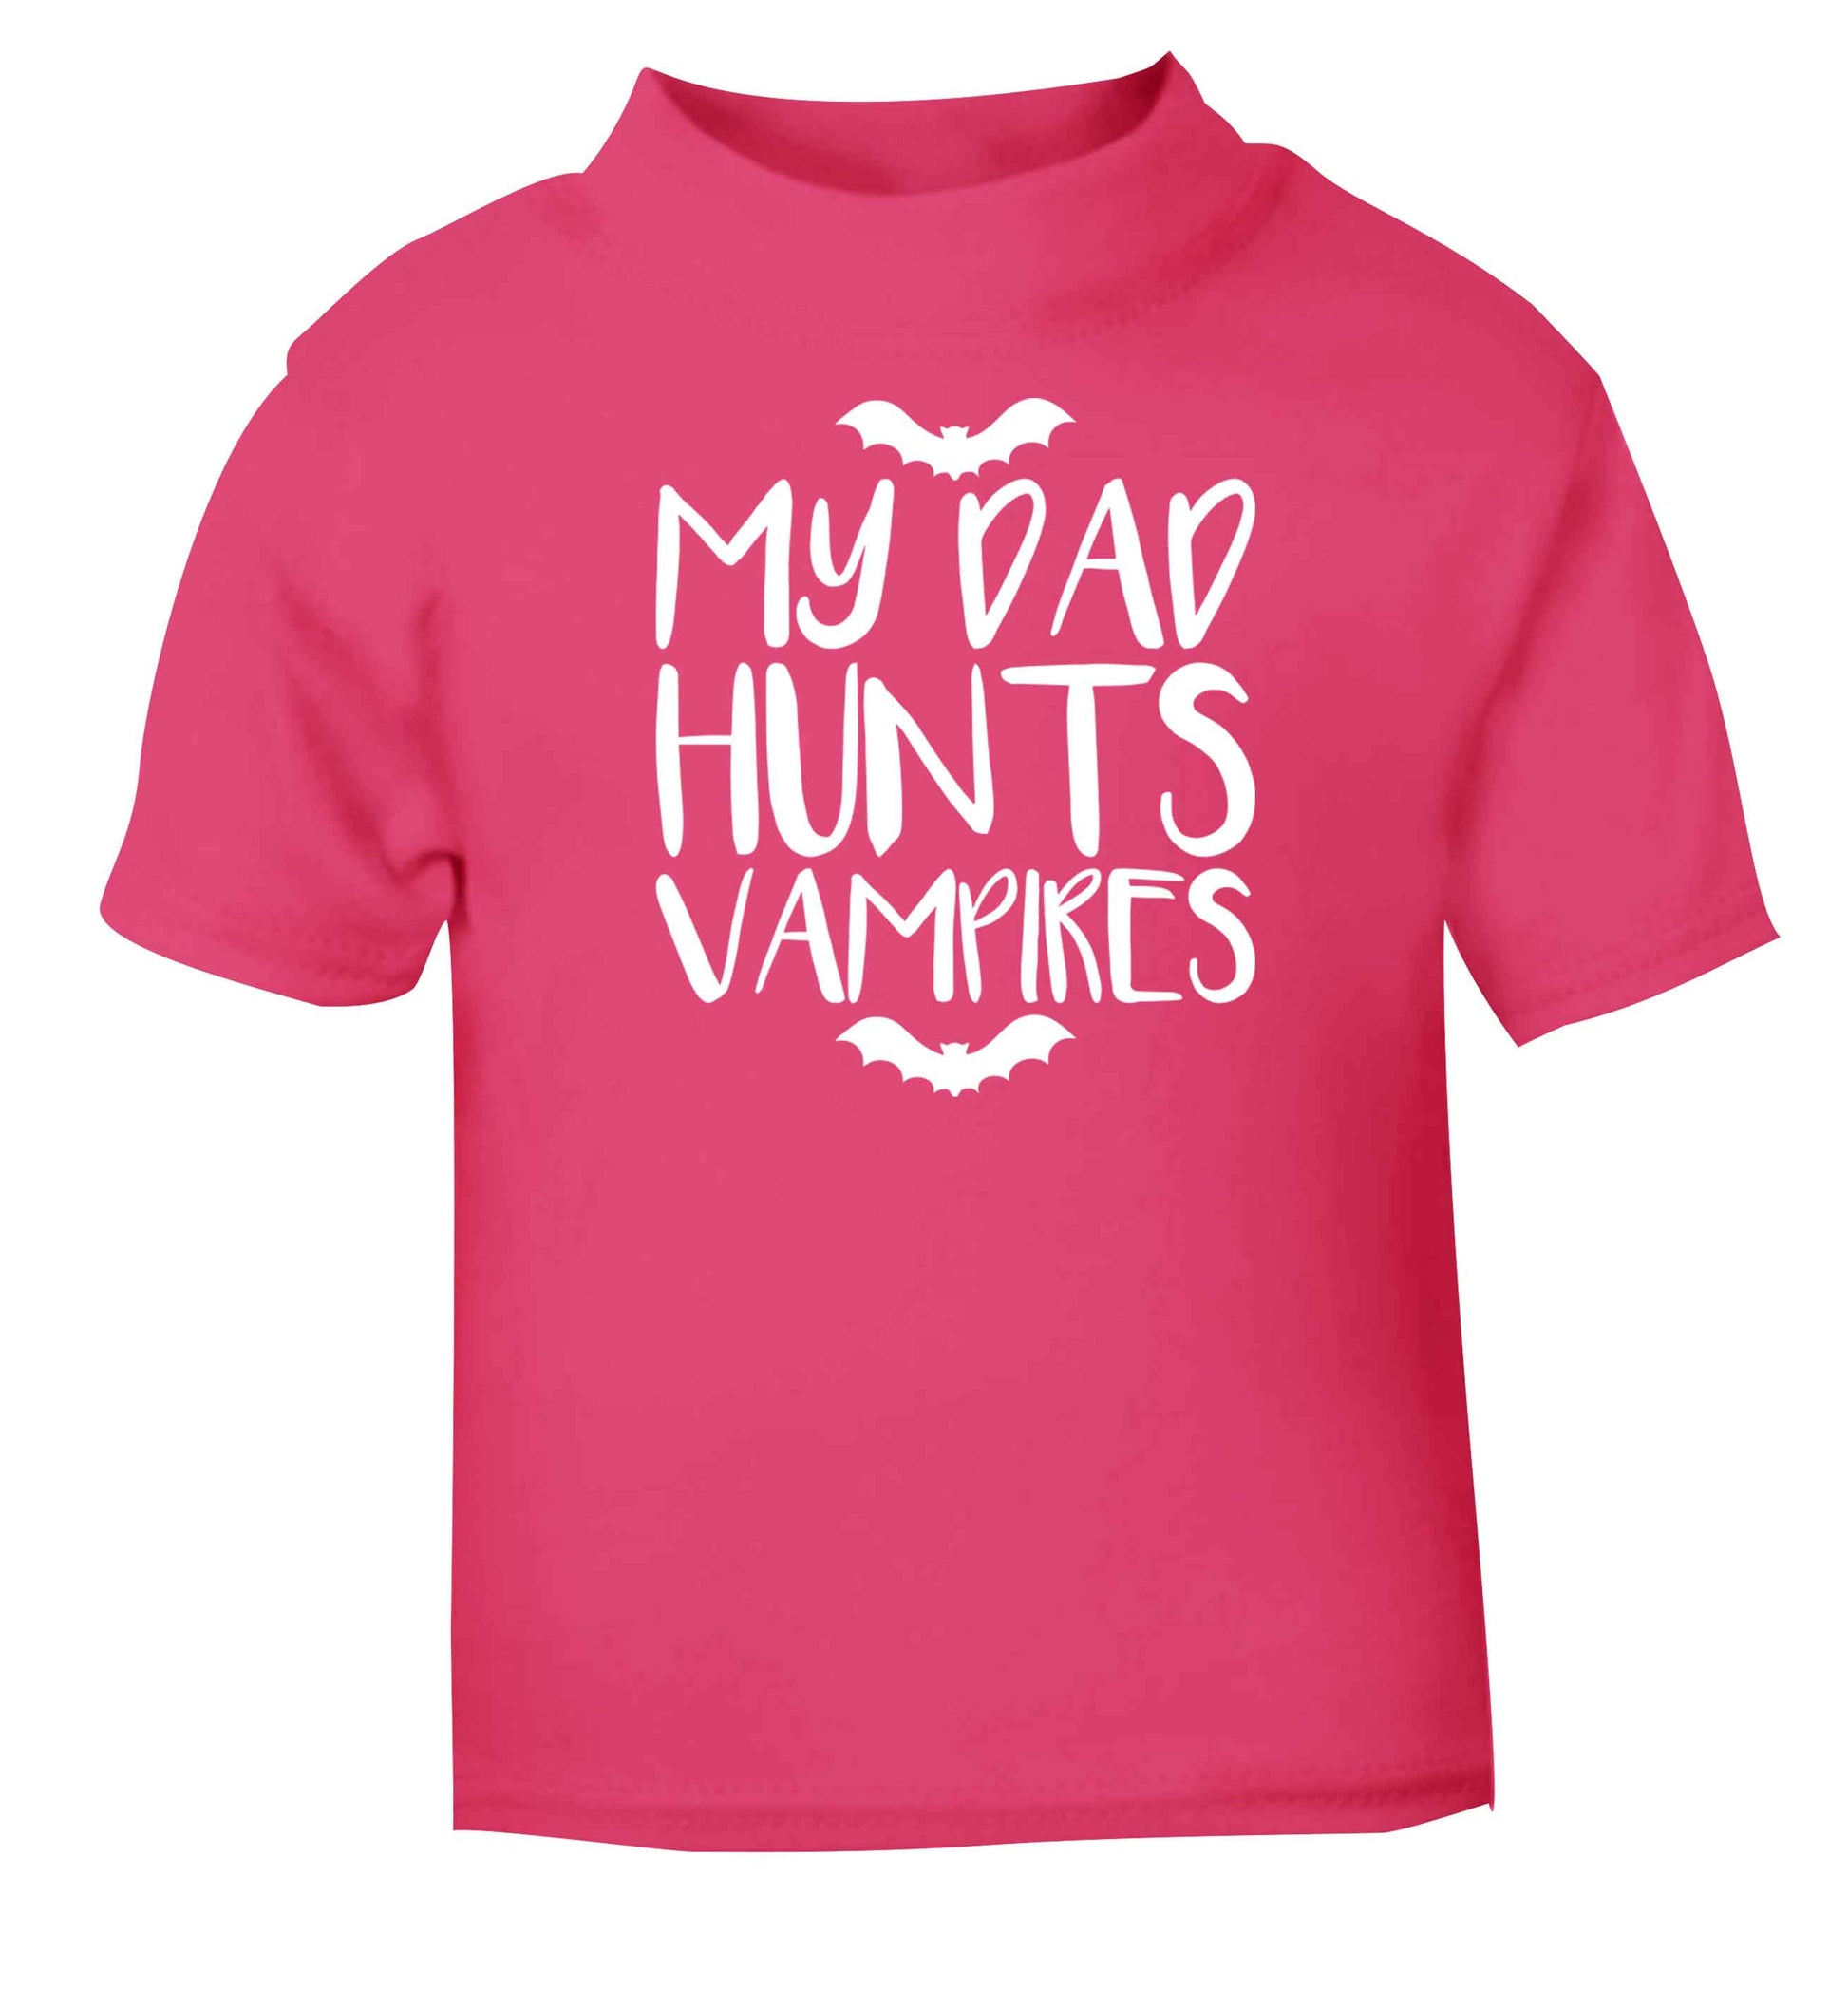 My dad hunts vampires pink baby toddler Tshirt 2 Years